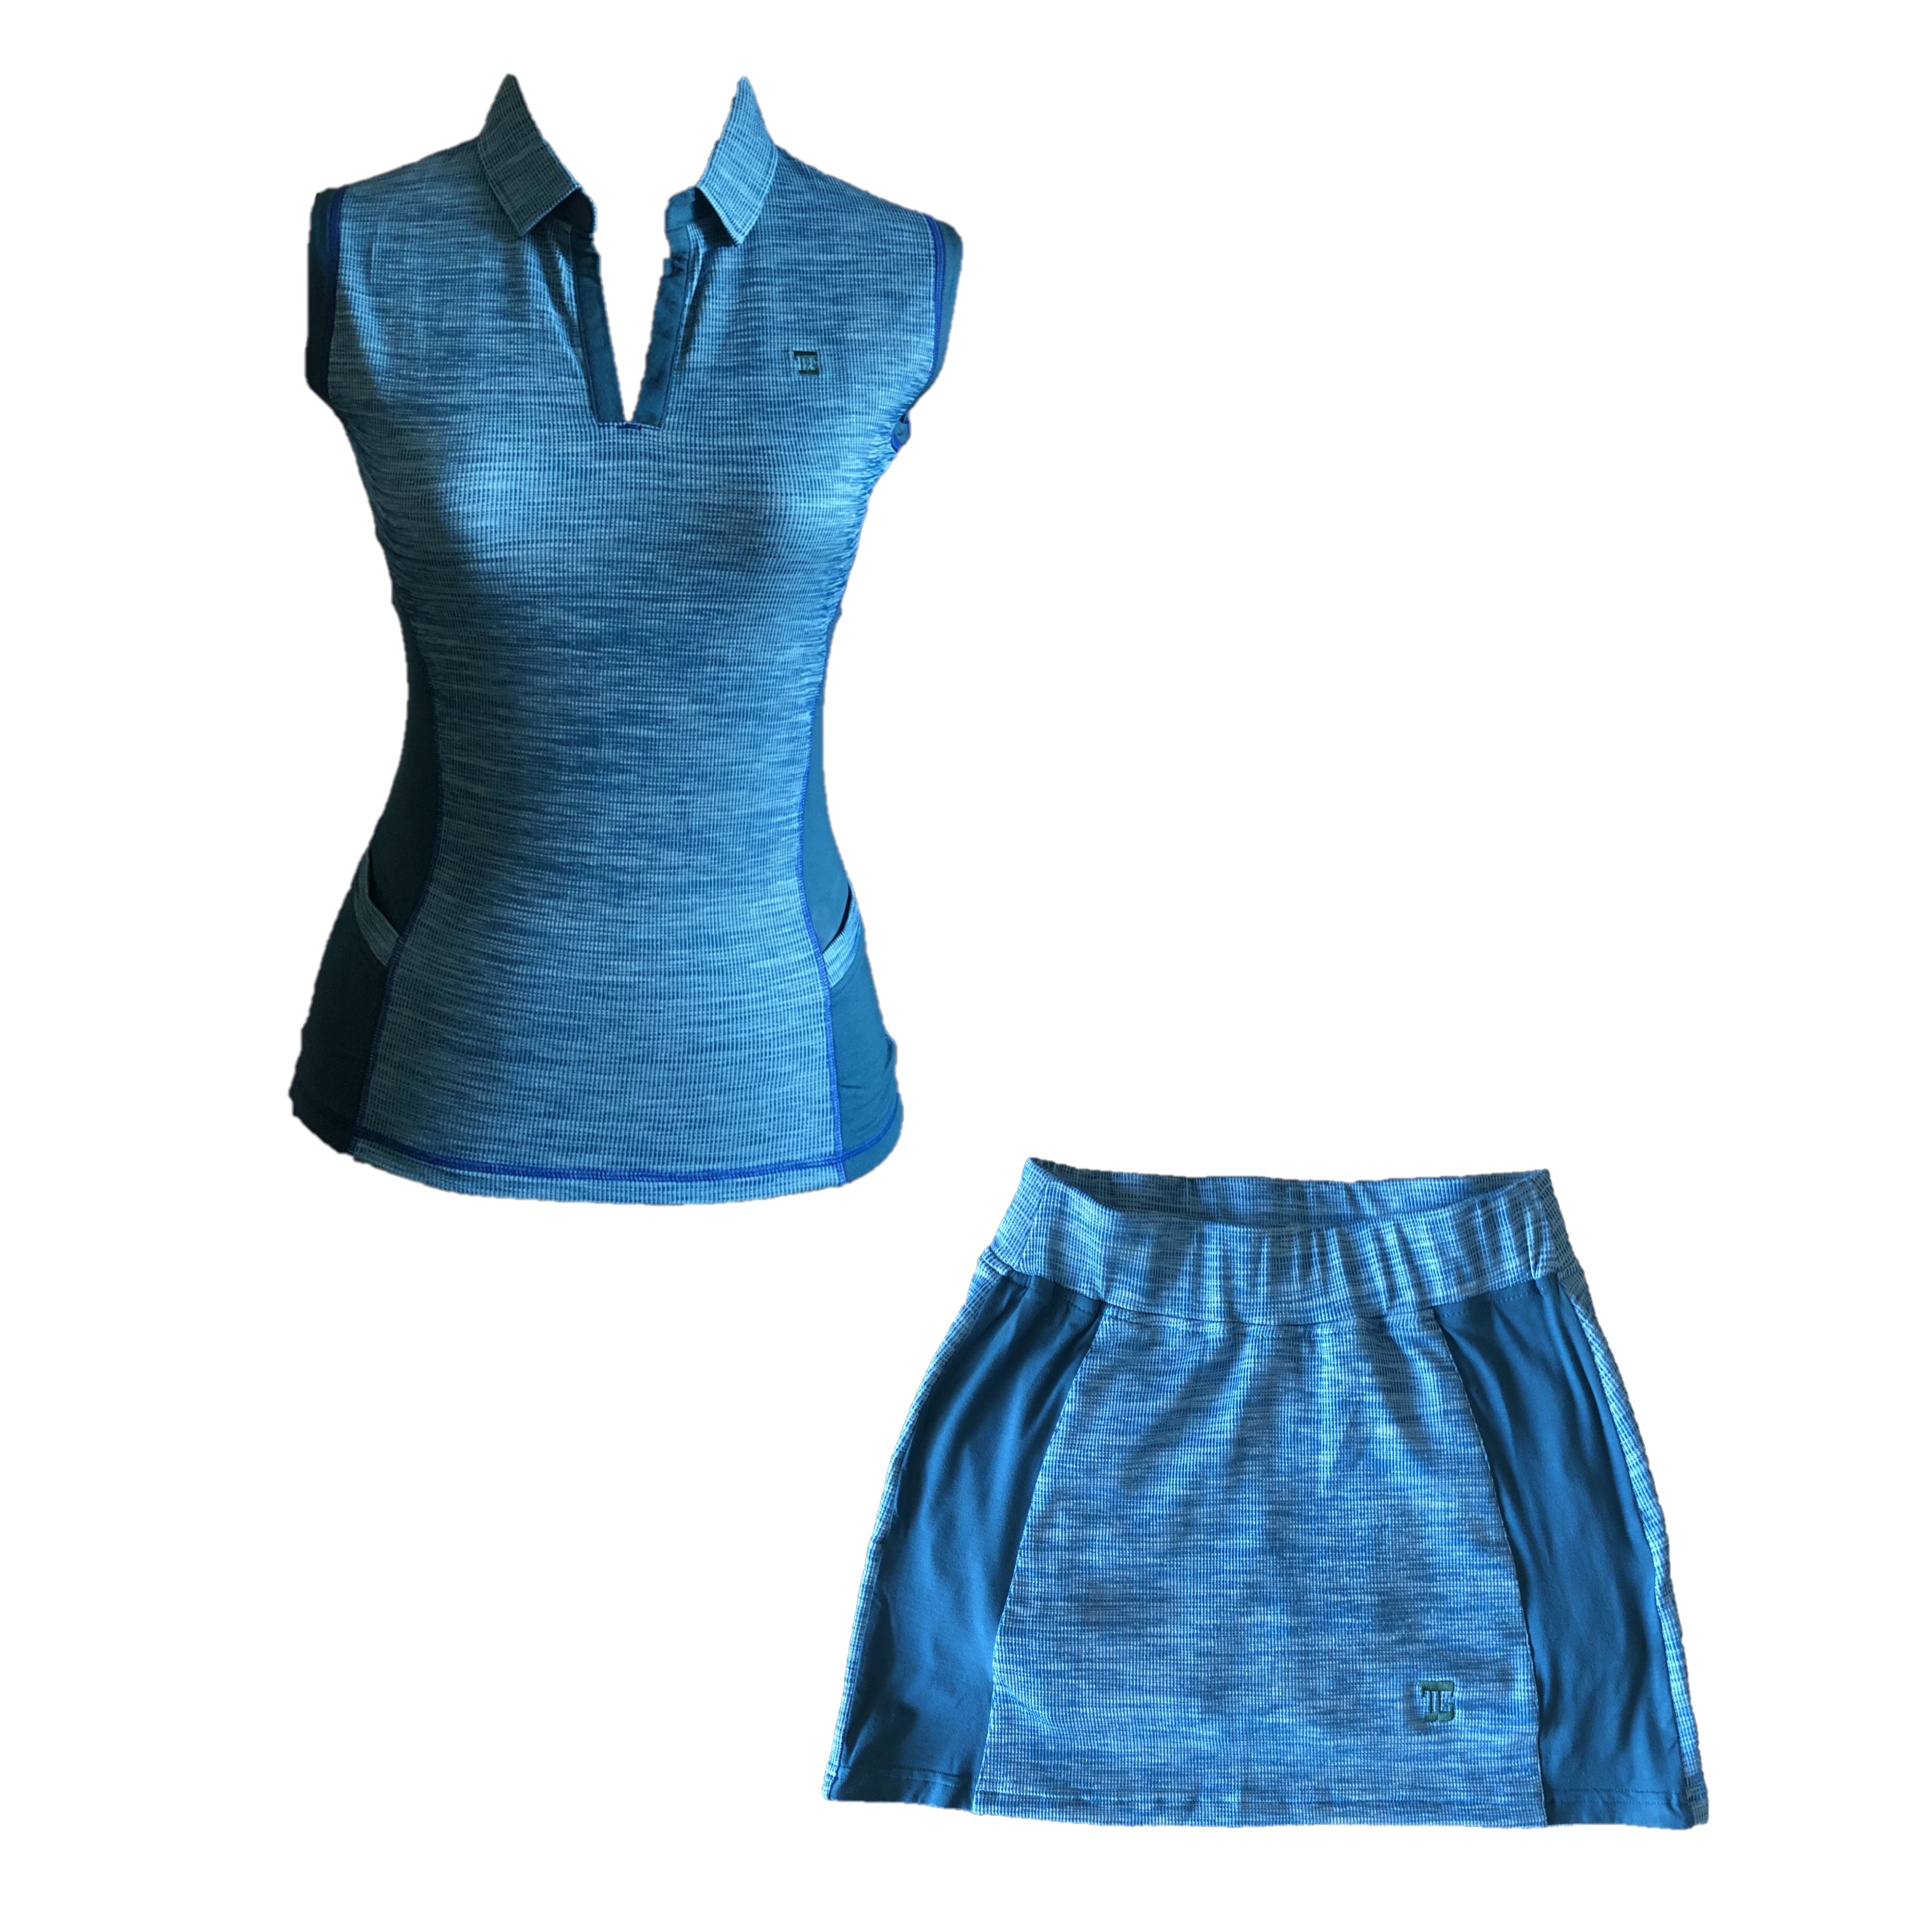 LGS-004 || Ladies Golf Skirt & Top Sleeveless Set Bright Blue w Blue Tosca Horizontal With Blue Pocket